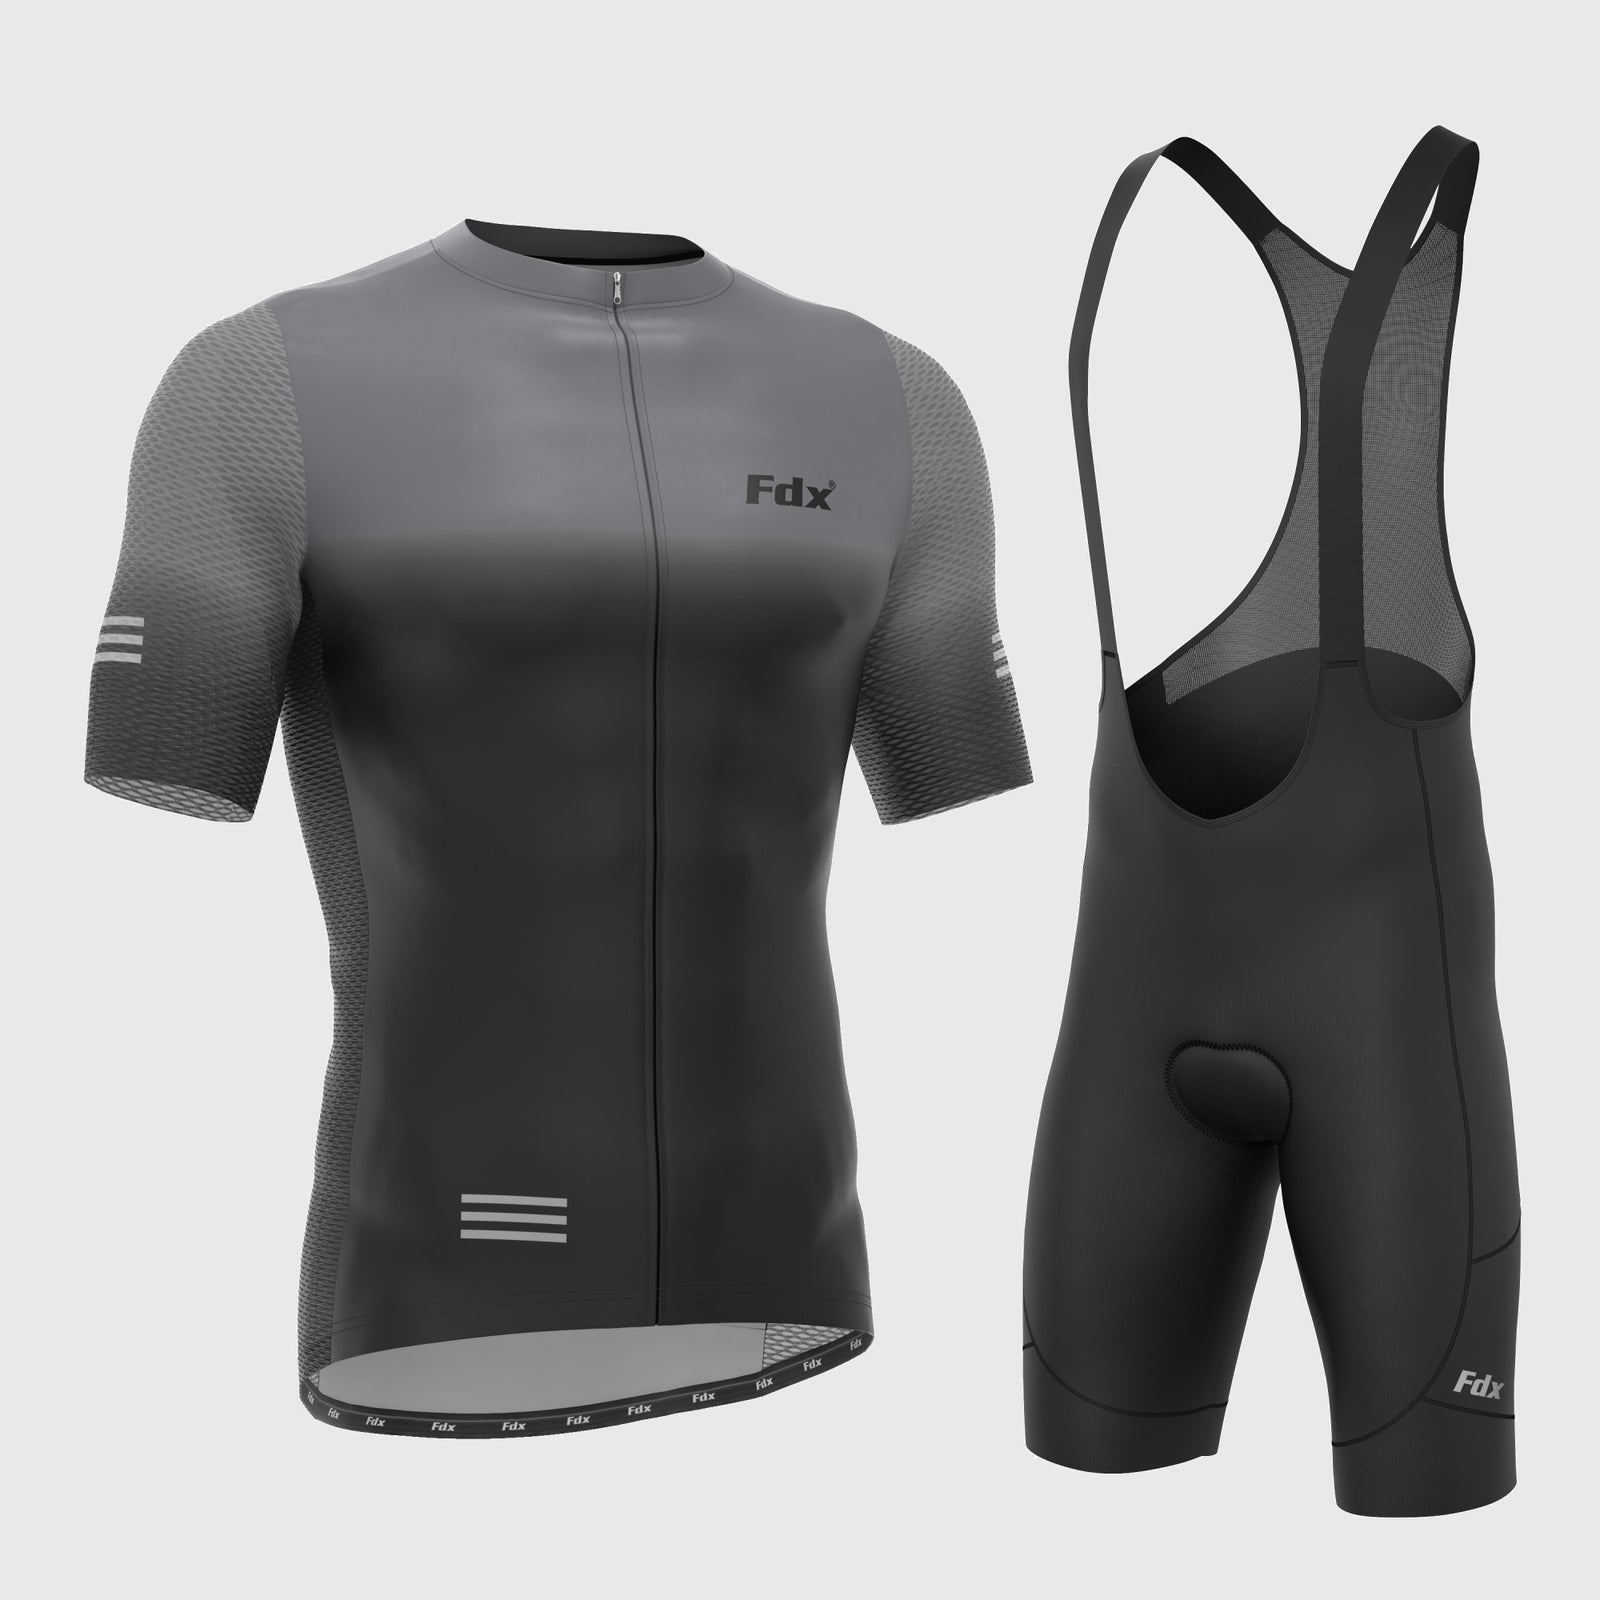 Fdx Mens Grey & Black Short Sleeve Cycling Jersey & Gel Padded Bib Shorts Best Summer Road Bike Wear Light Weight, Hi-viz Reflectors & Pockets - Duo